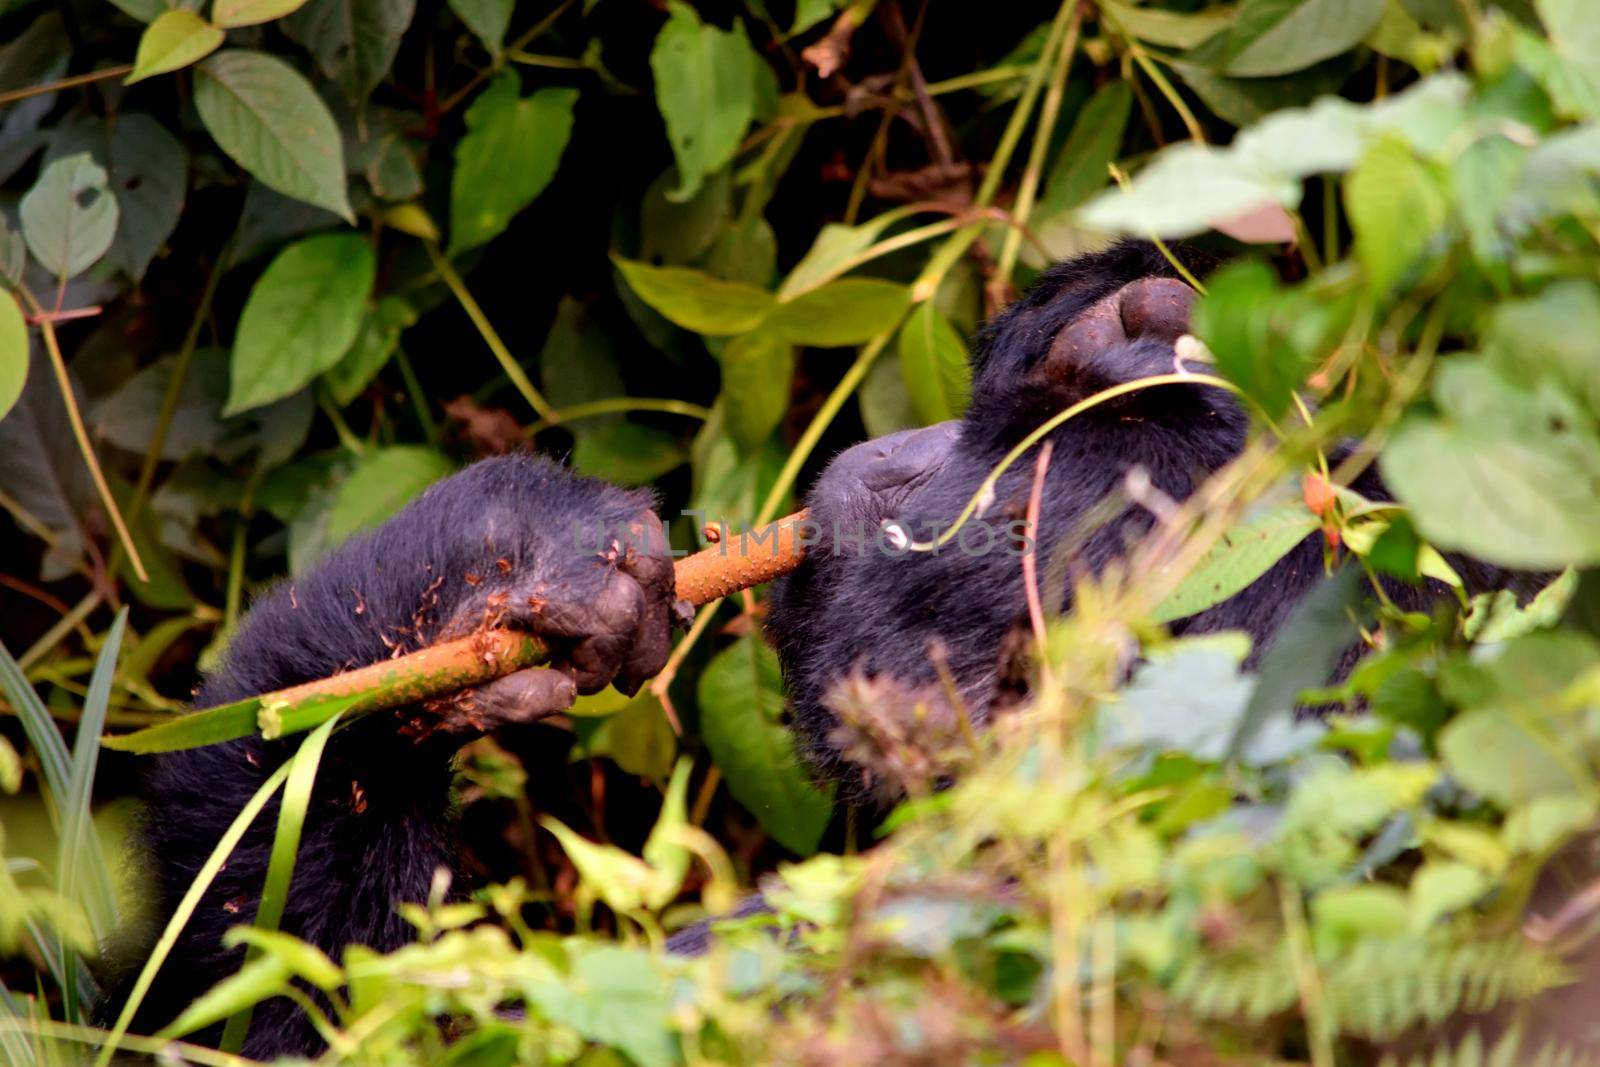 Closeup of a mountain gorilla silverback eating foliage in the Bwindi Impenetrable Forest, Uganda